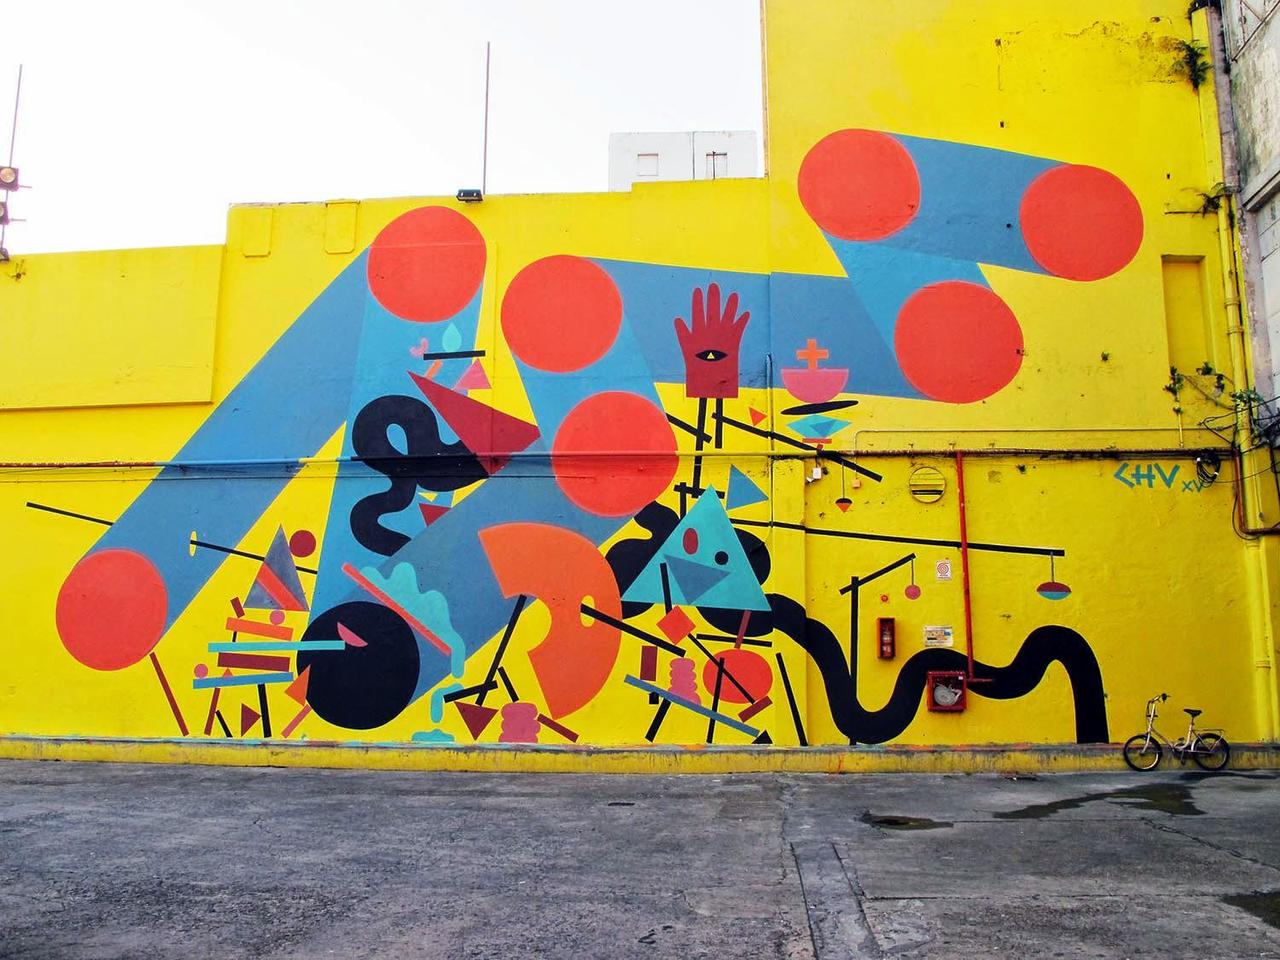 Streetart by Chu - Ciudad Cultural Konex in Buenos Aires.

#streetart #urbanart #mural #art #graffiti http://t.co/llsw4oLkYq